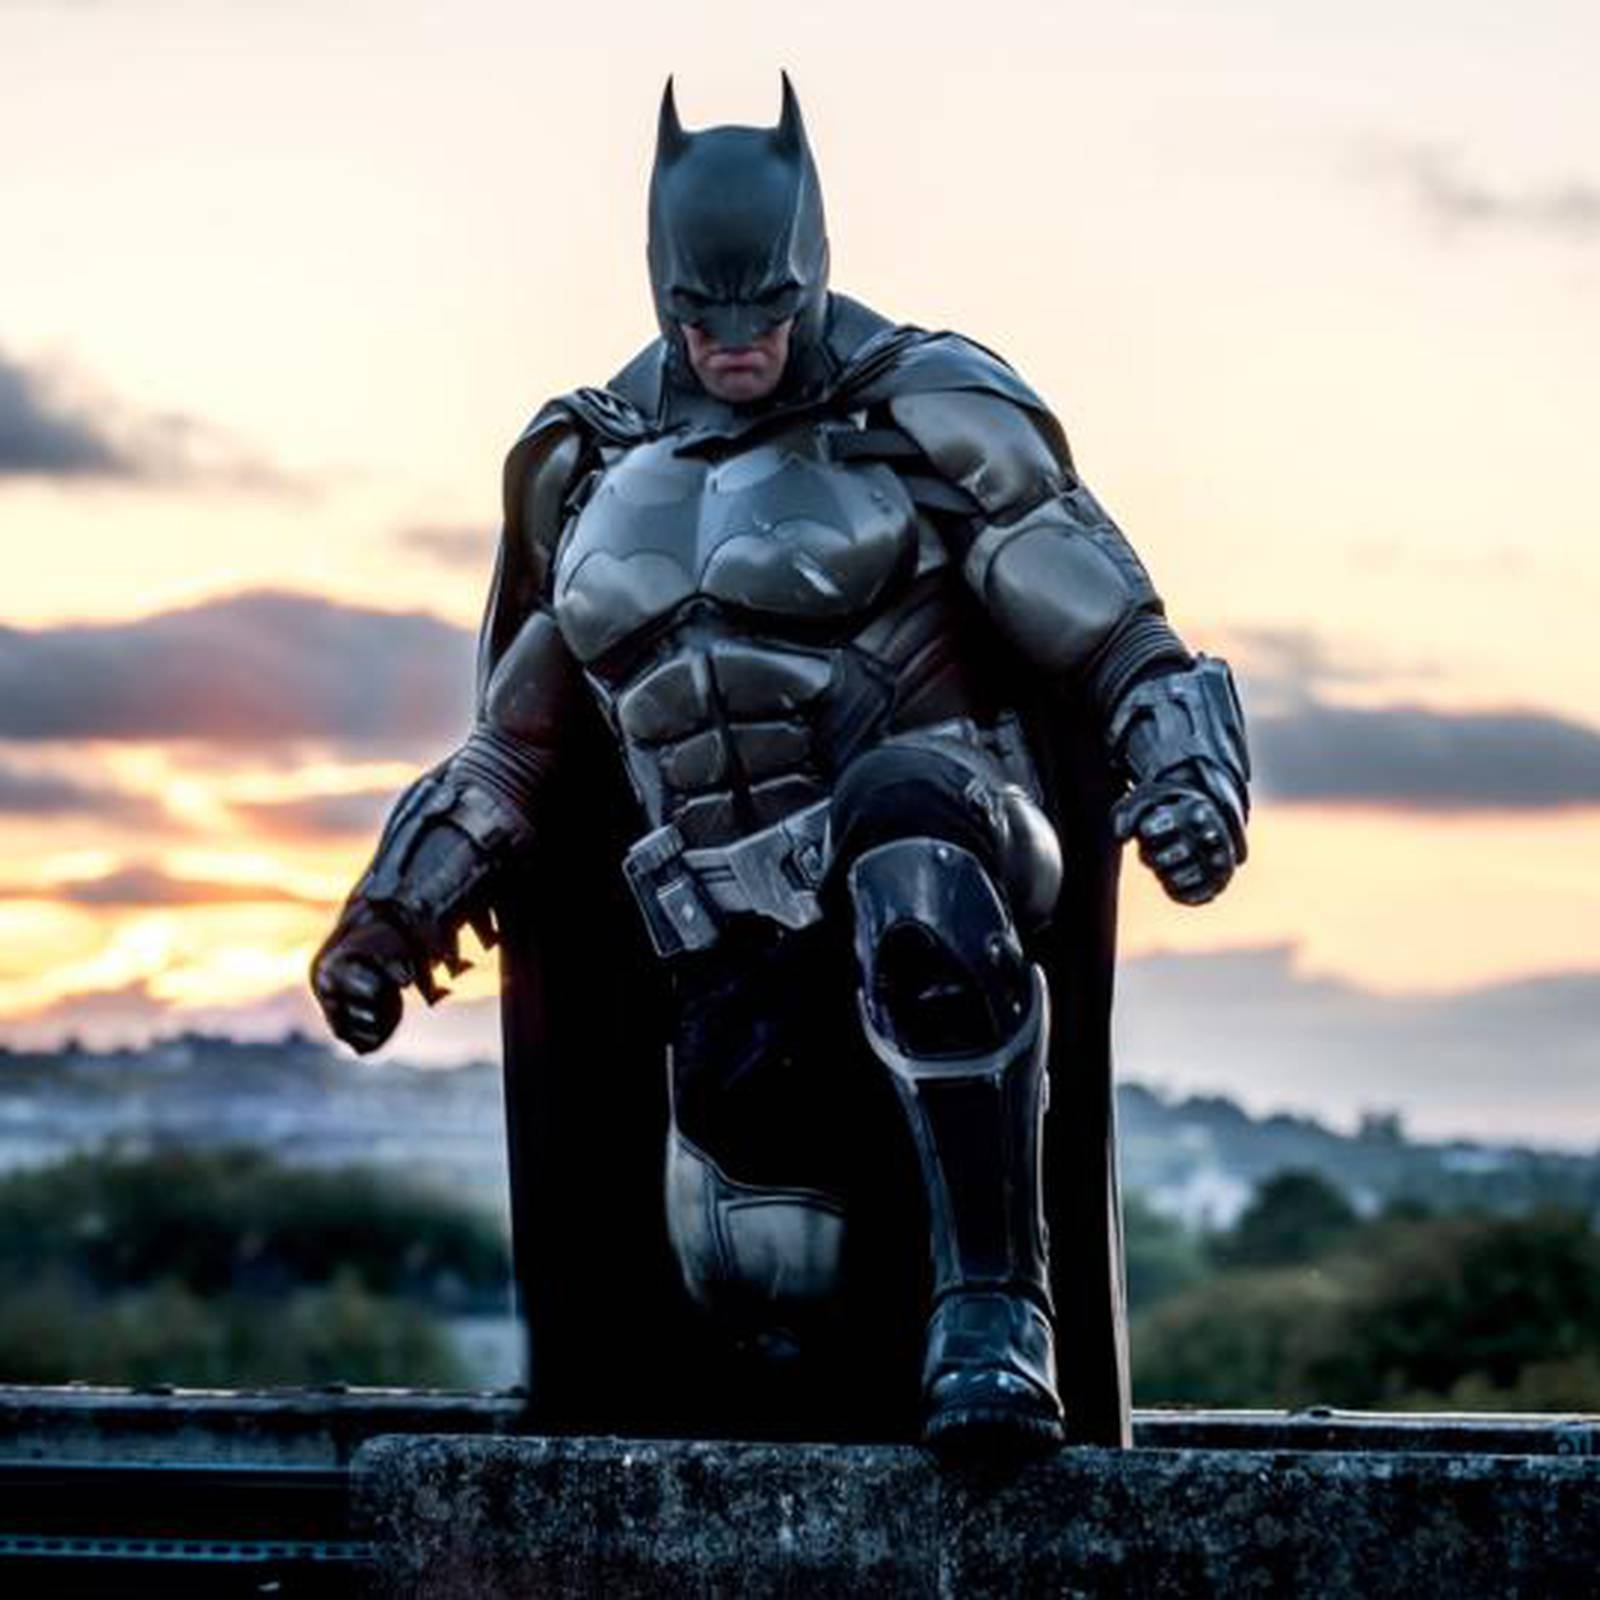 Galway studio creates 3D-printed Batman replica costume – The Irish Times